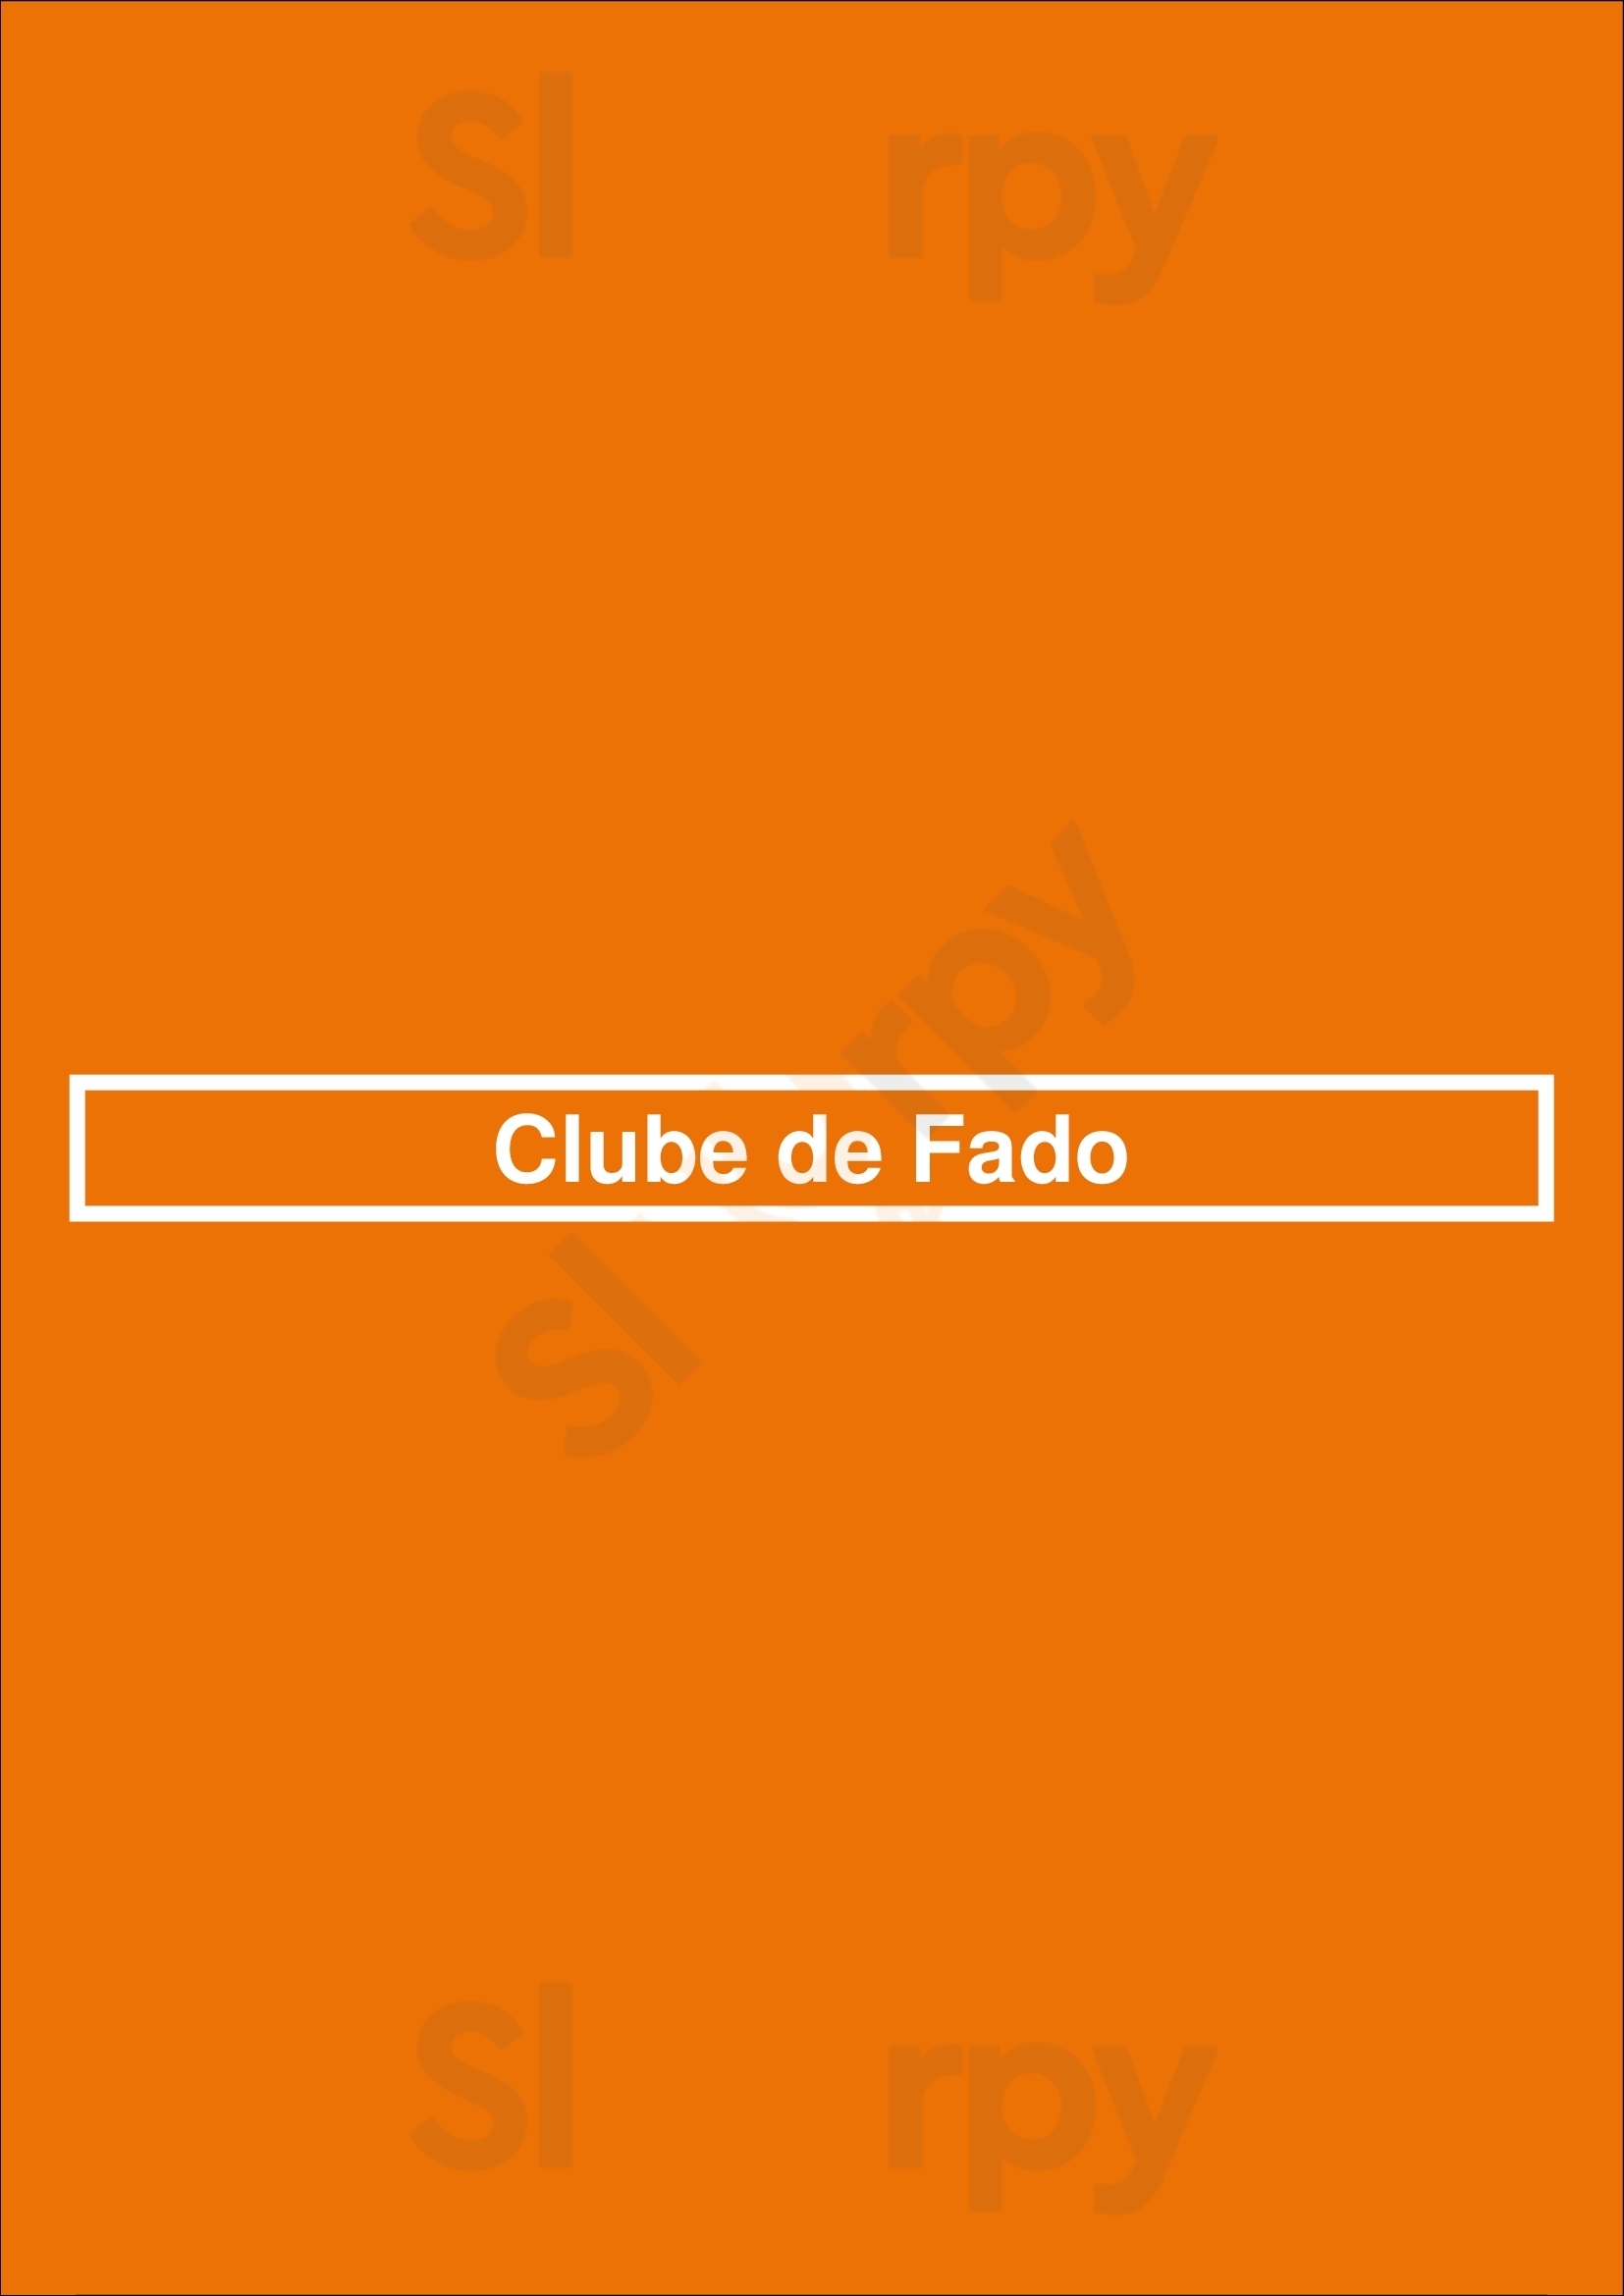 Clube De Fado Lisboa Menu - 1